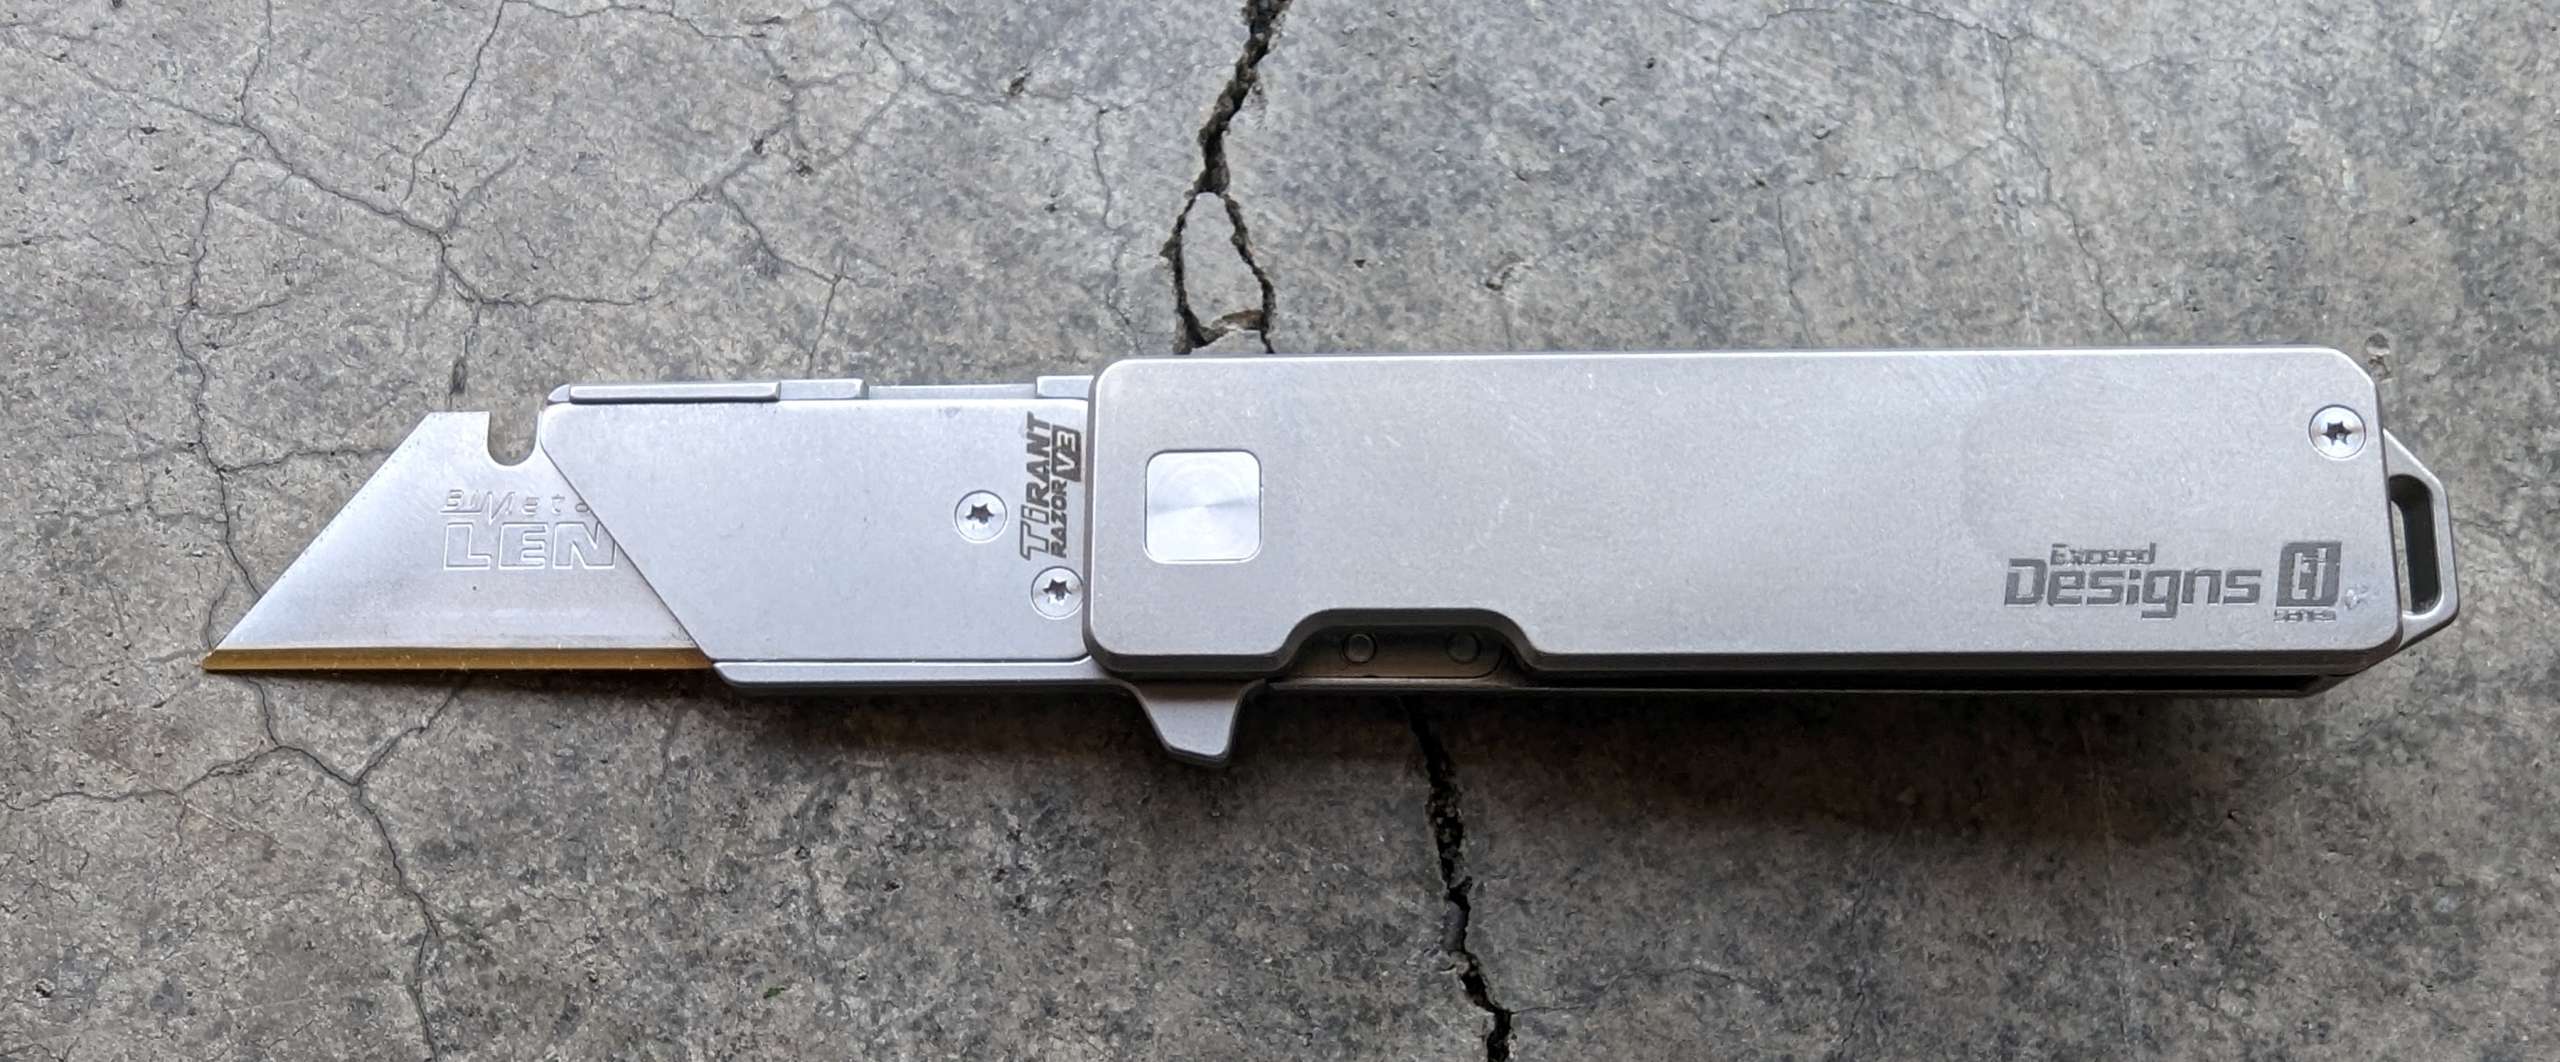 Titan Auto Retractable Safety Knife